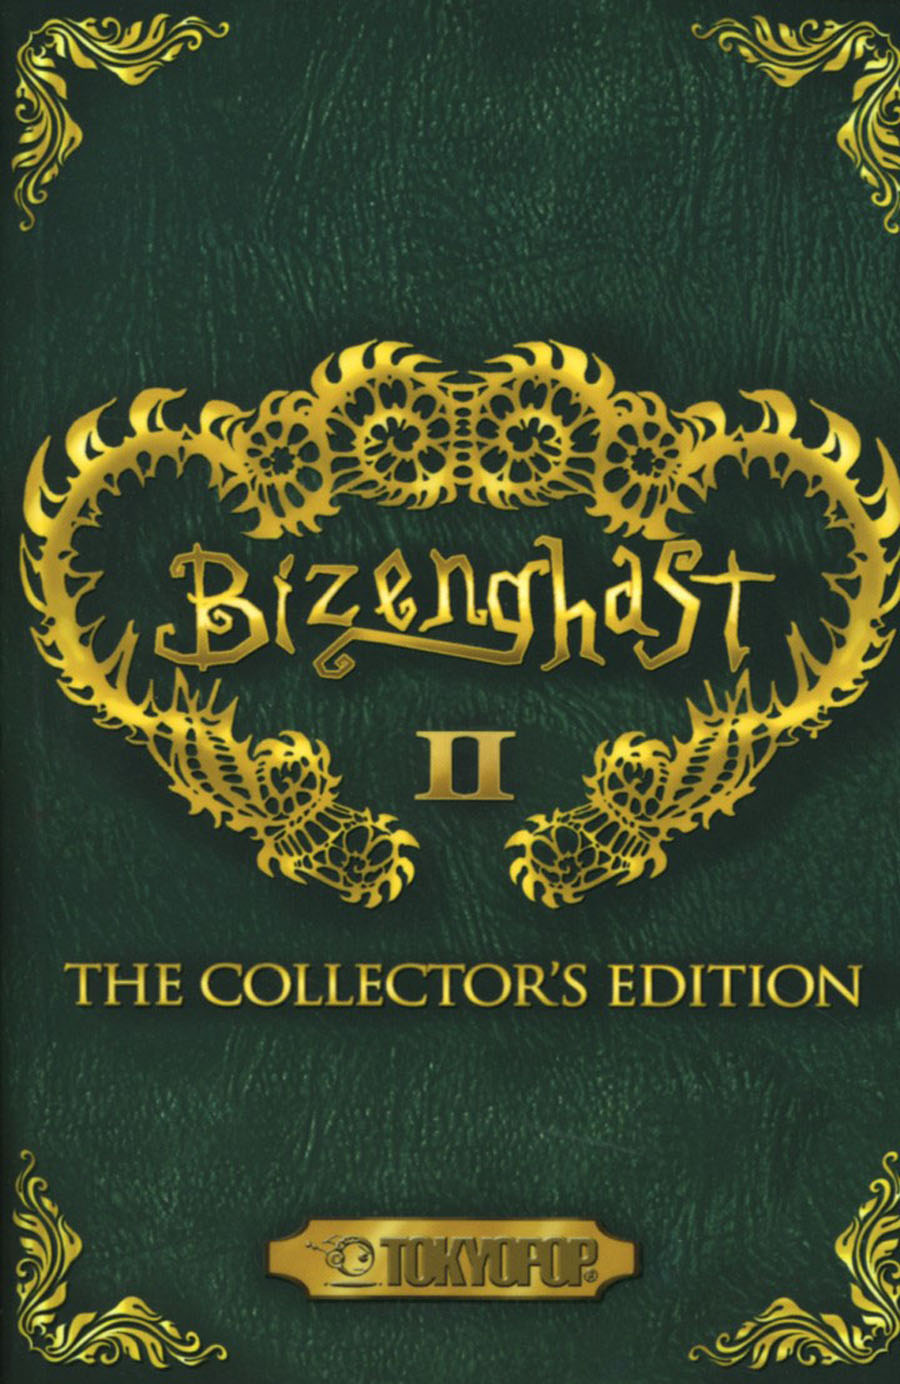 Bizenghast Collectors Edition Vol 2 GN